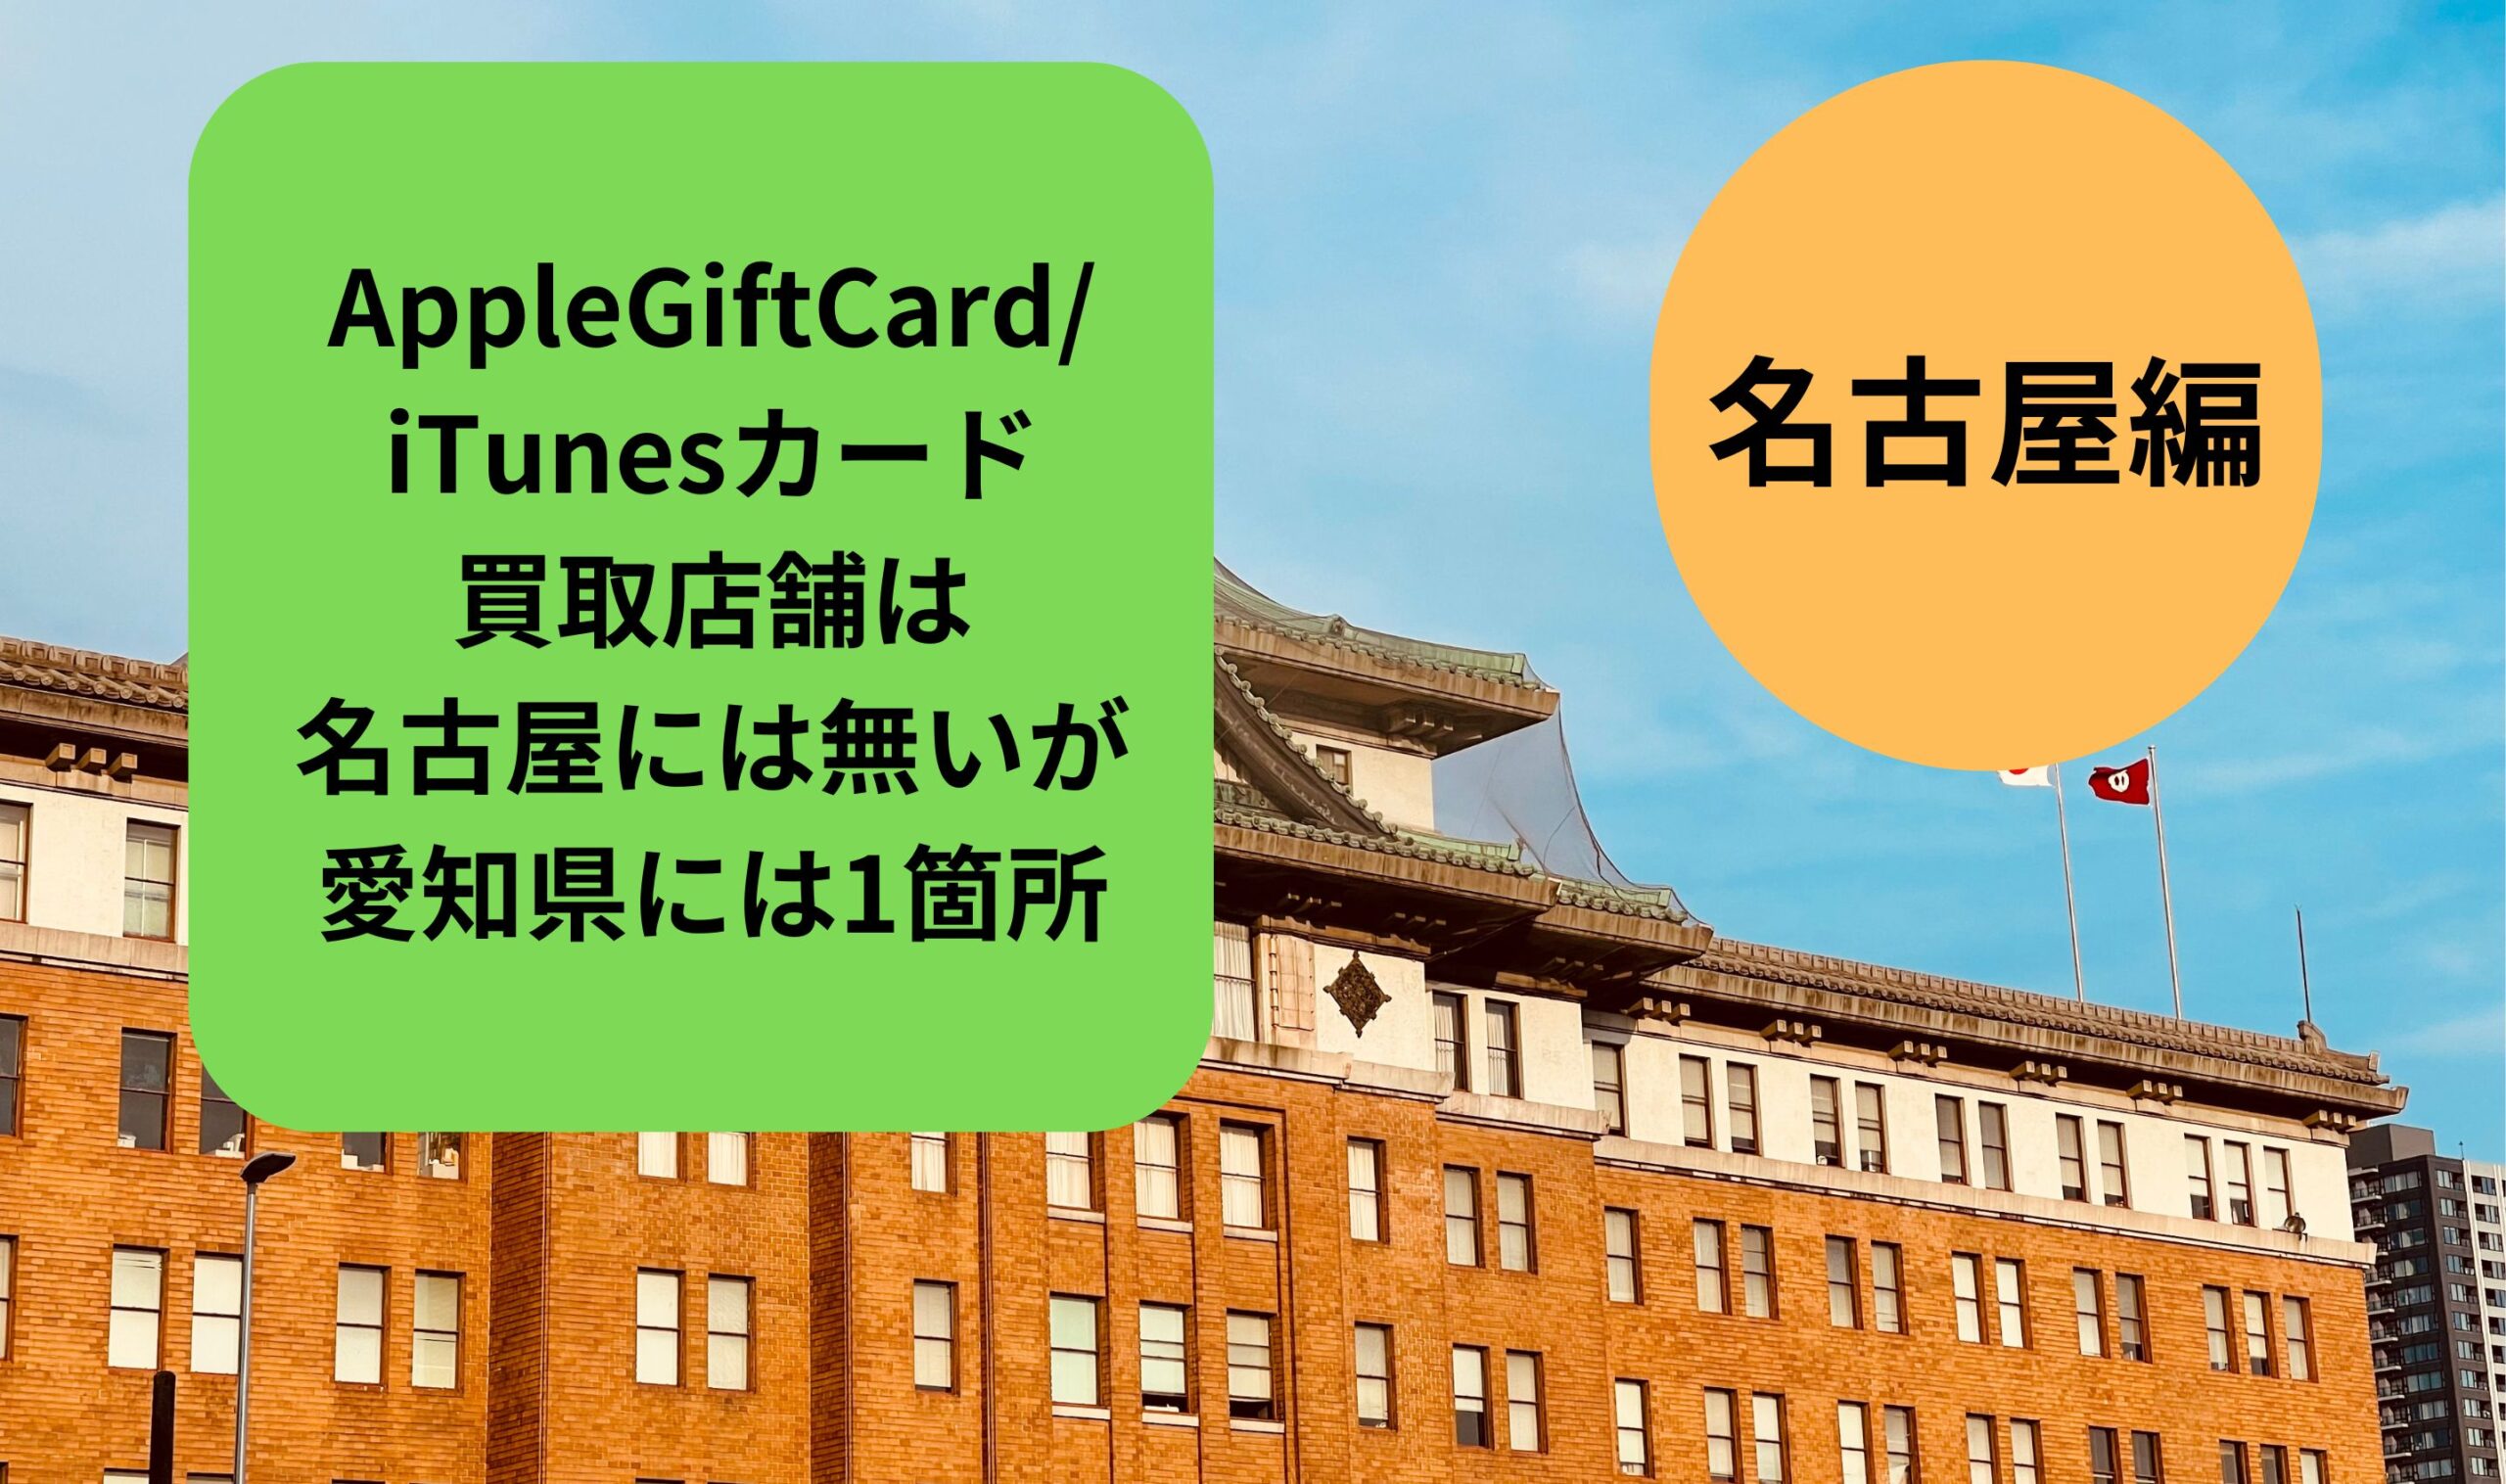 AppleGiftCard/iTunesカード買取店舗は名古屋は無いが愛知県には1箇所